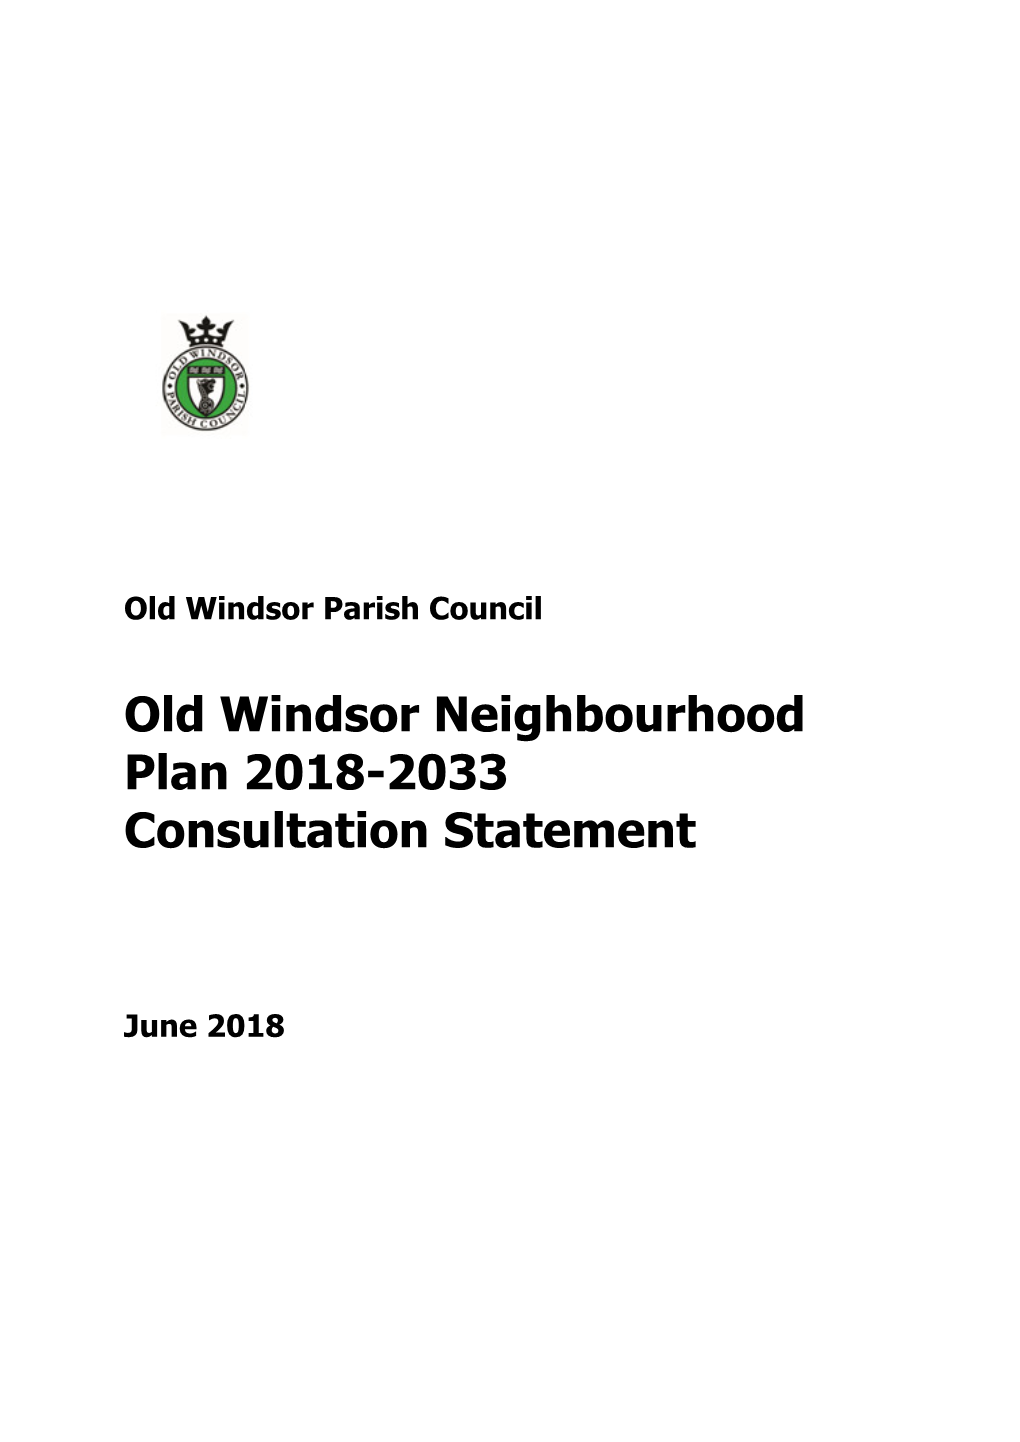 Old Windsor Neighbourhood Plan 2018-2033 Consultation Statement